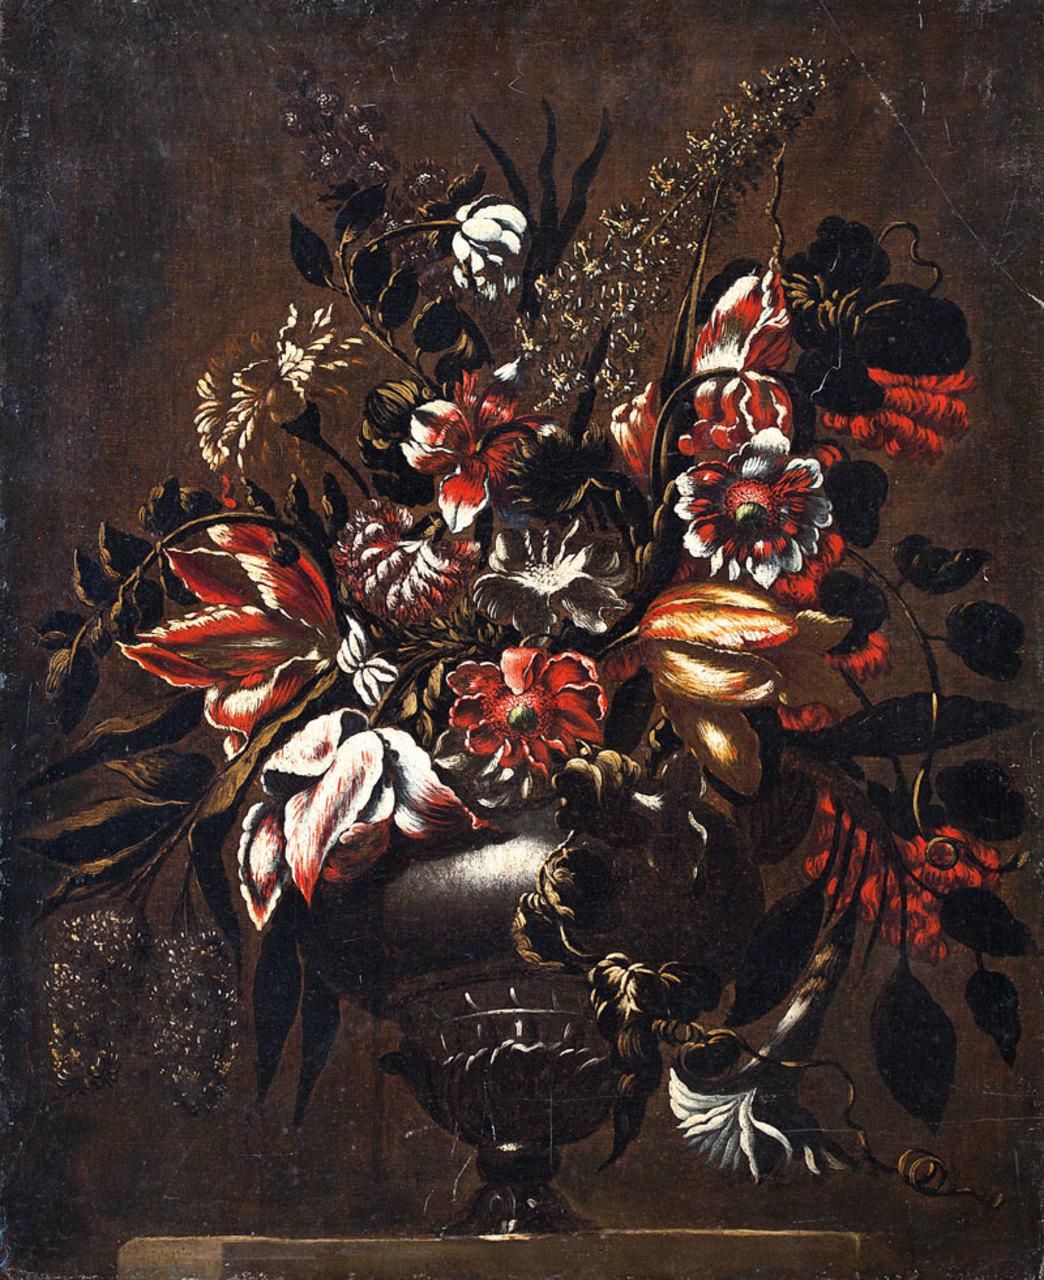 ESCUELA ESPAÑOLA, Fns. S. XVII Vaso con fiori
Olio su tela
75 x 62 cm.